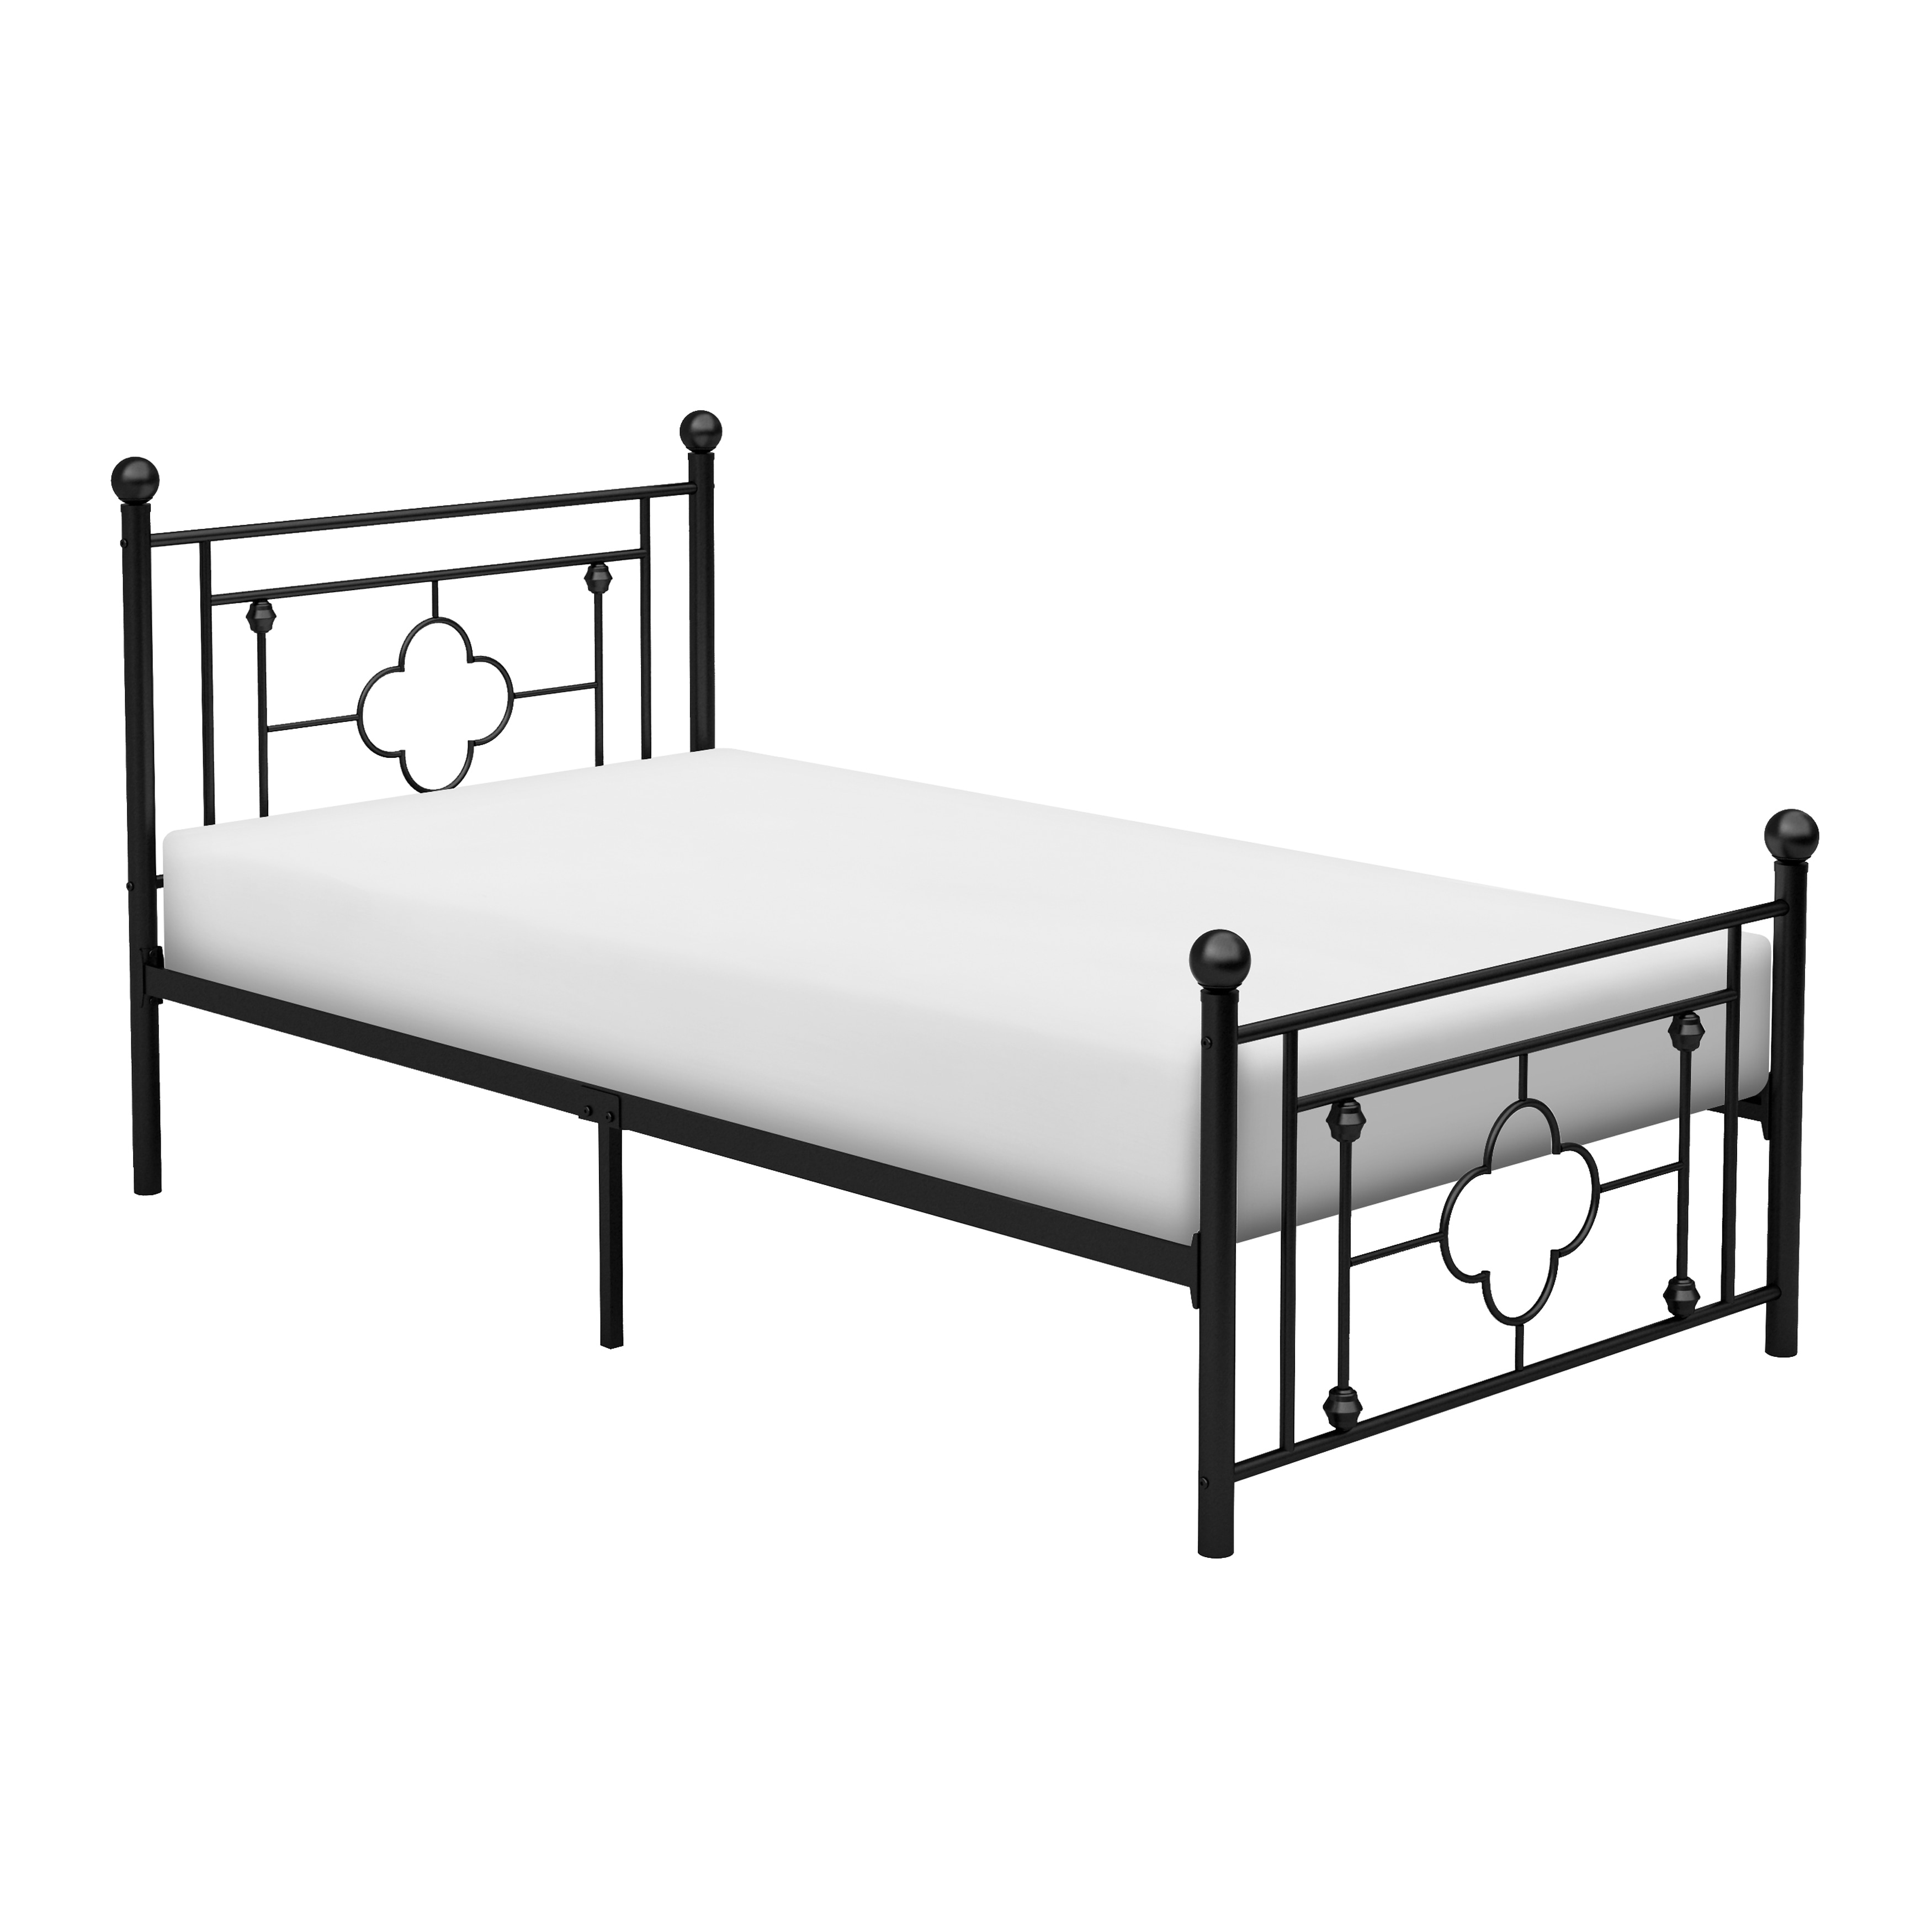 Keller Qua-trefoil Metal Bed